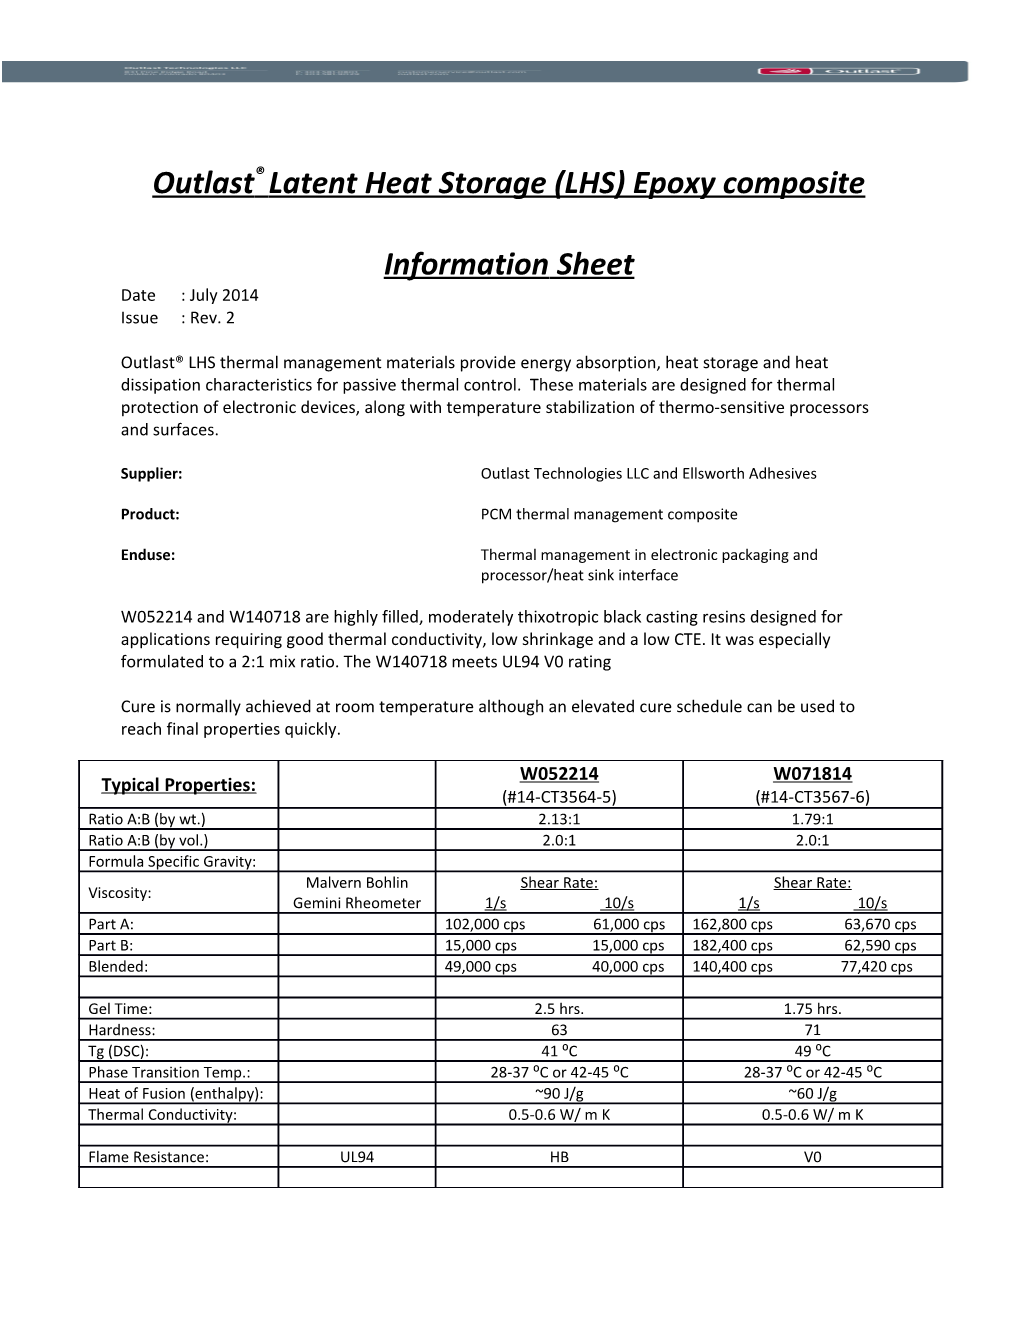 Outlast Latent Heat Storage (LHS) Epoxy Composite